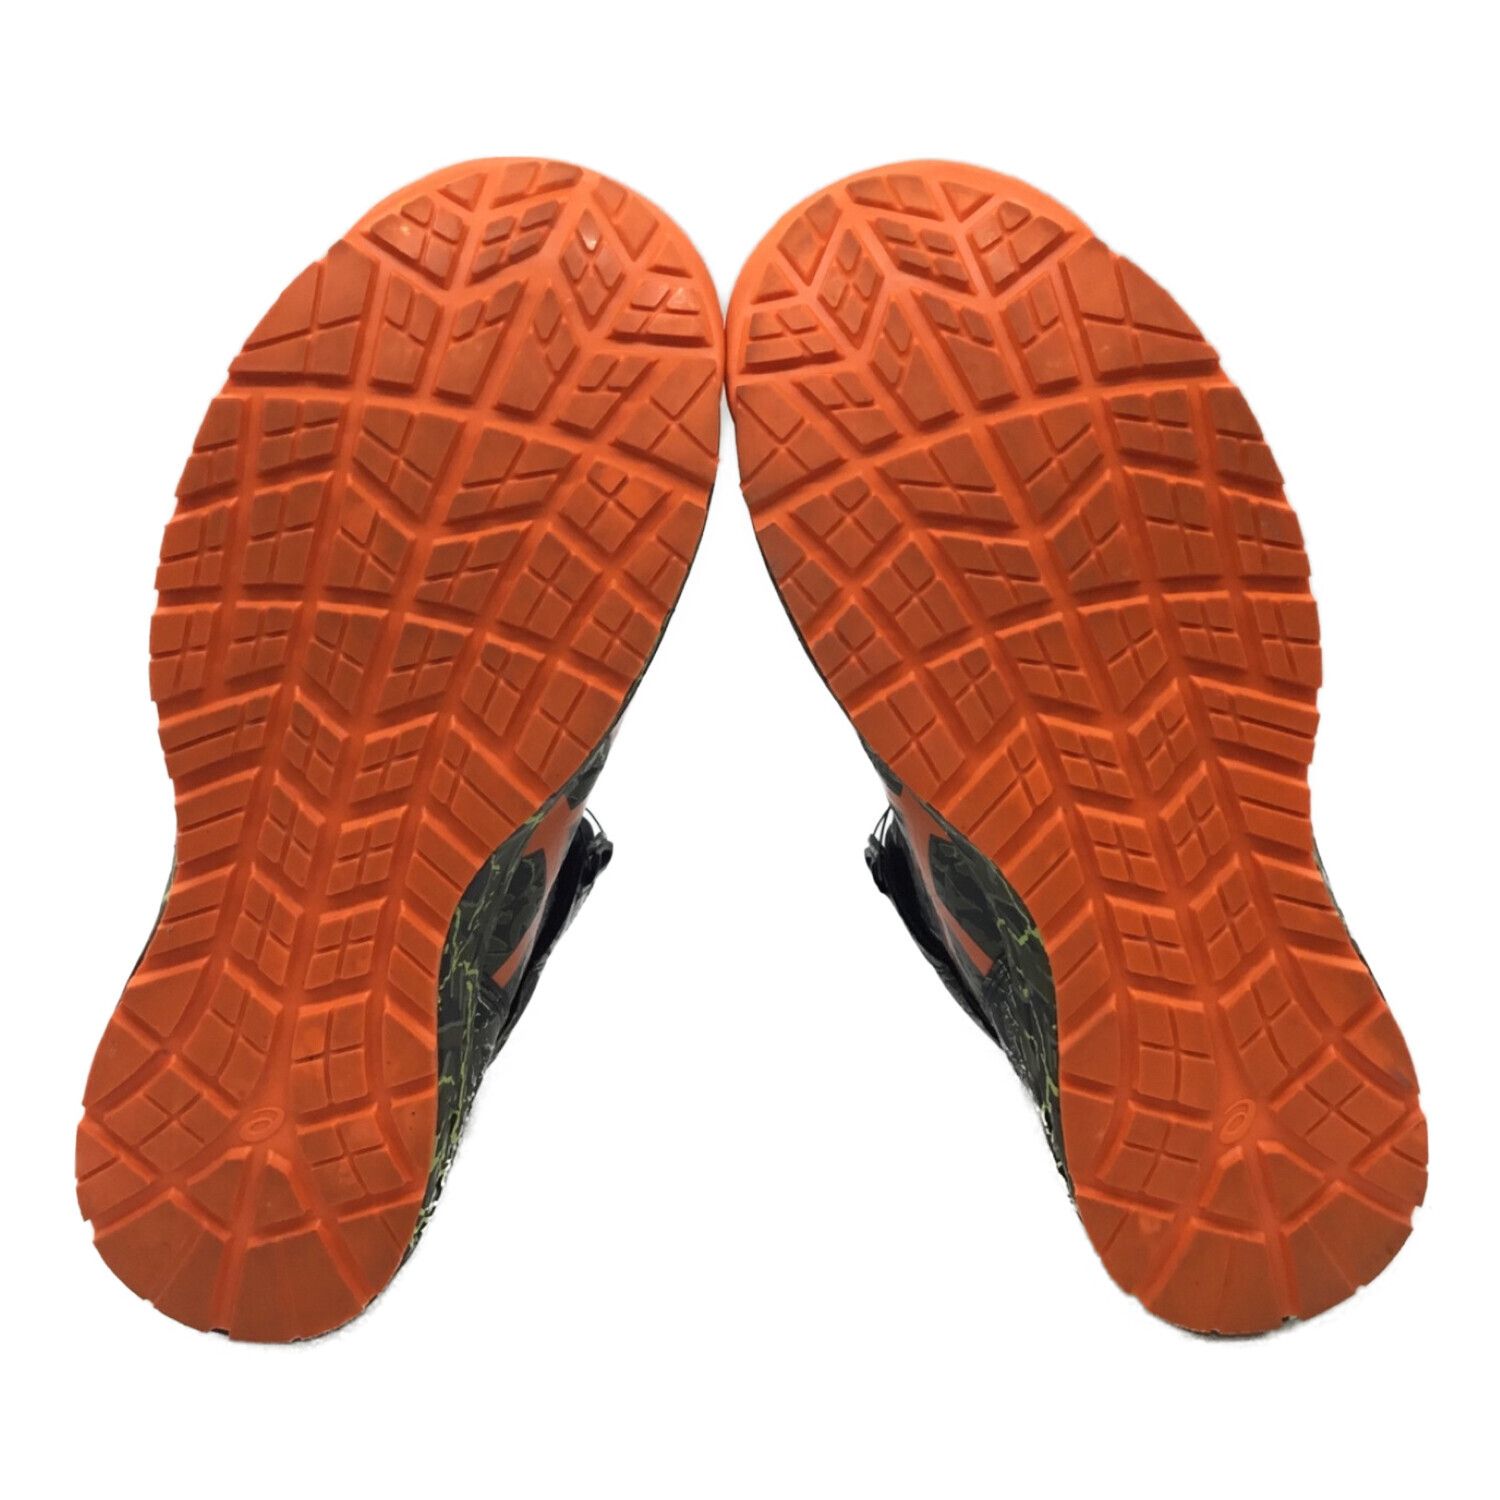 asics (アシックス) 安全靴 メンズ SIZE 26.5cm カーキ 1273A077-300